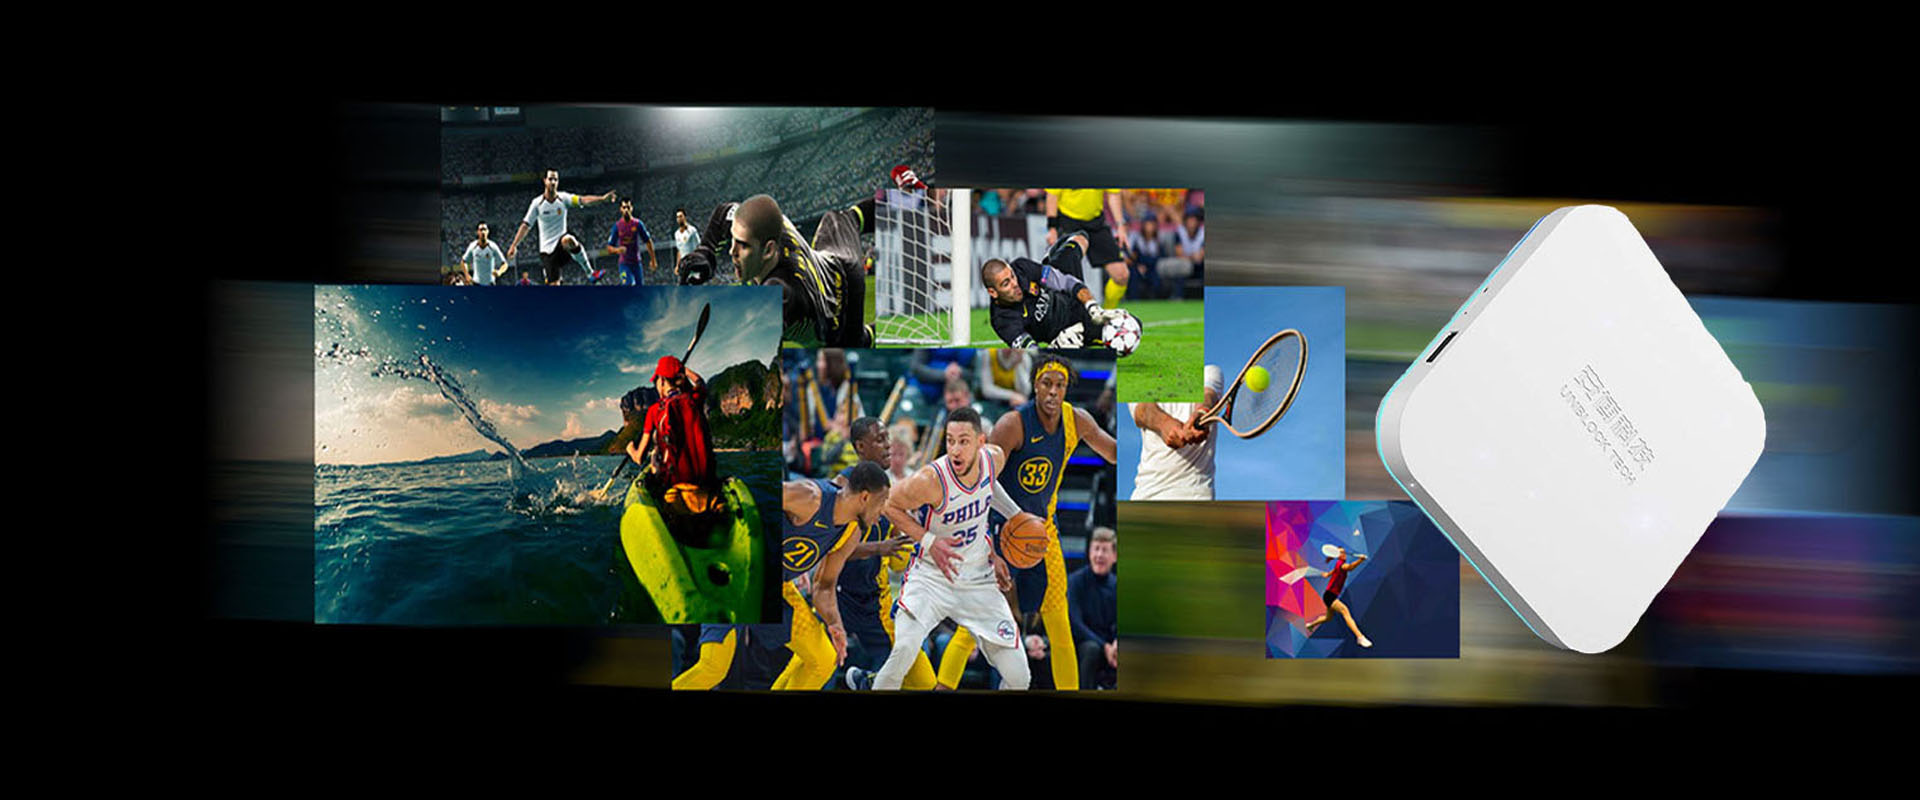 UNBLOCK TECH UBOX8 - صندوق تلفزيون رياضي مصمم لعشاق الرياضة